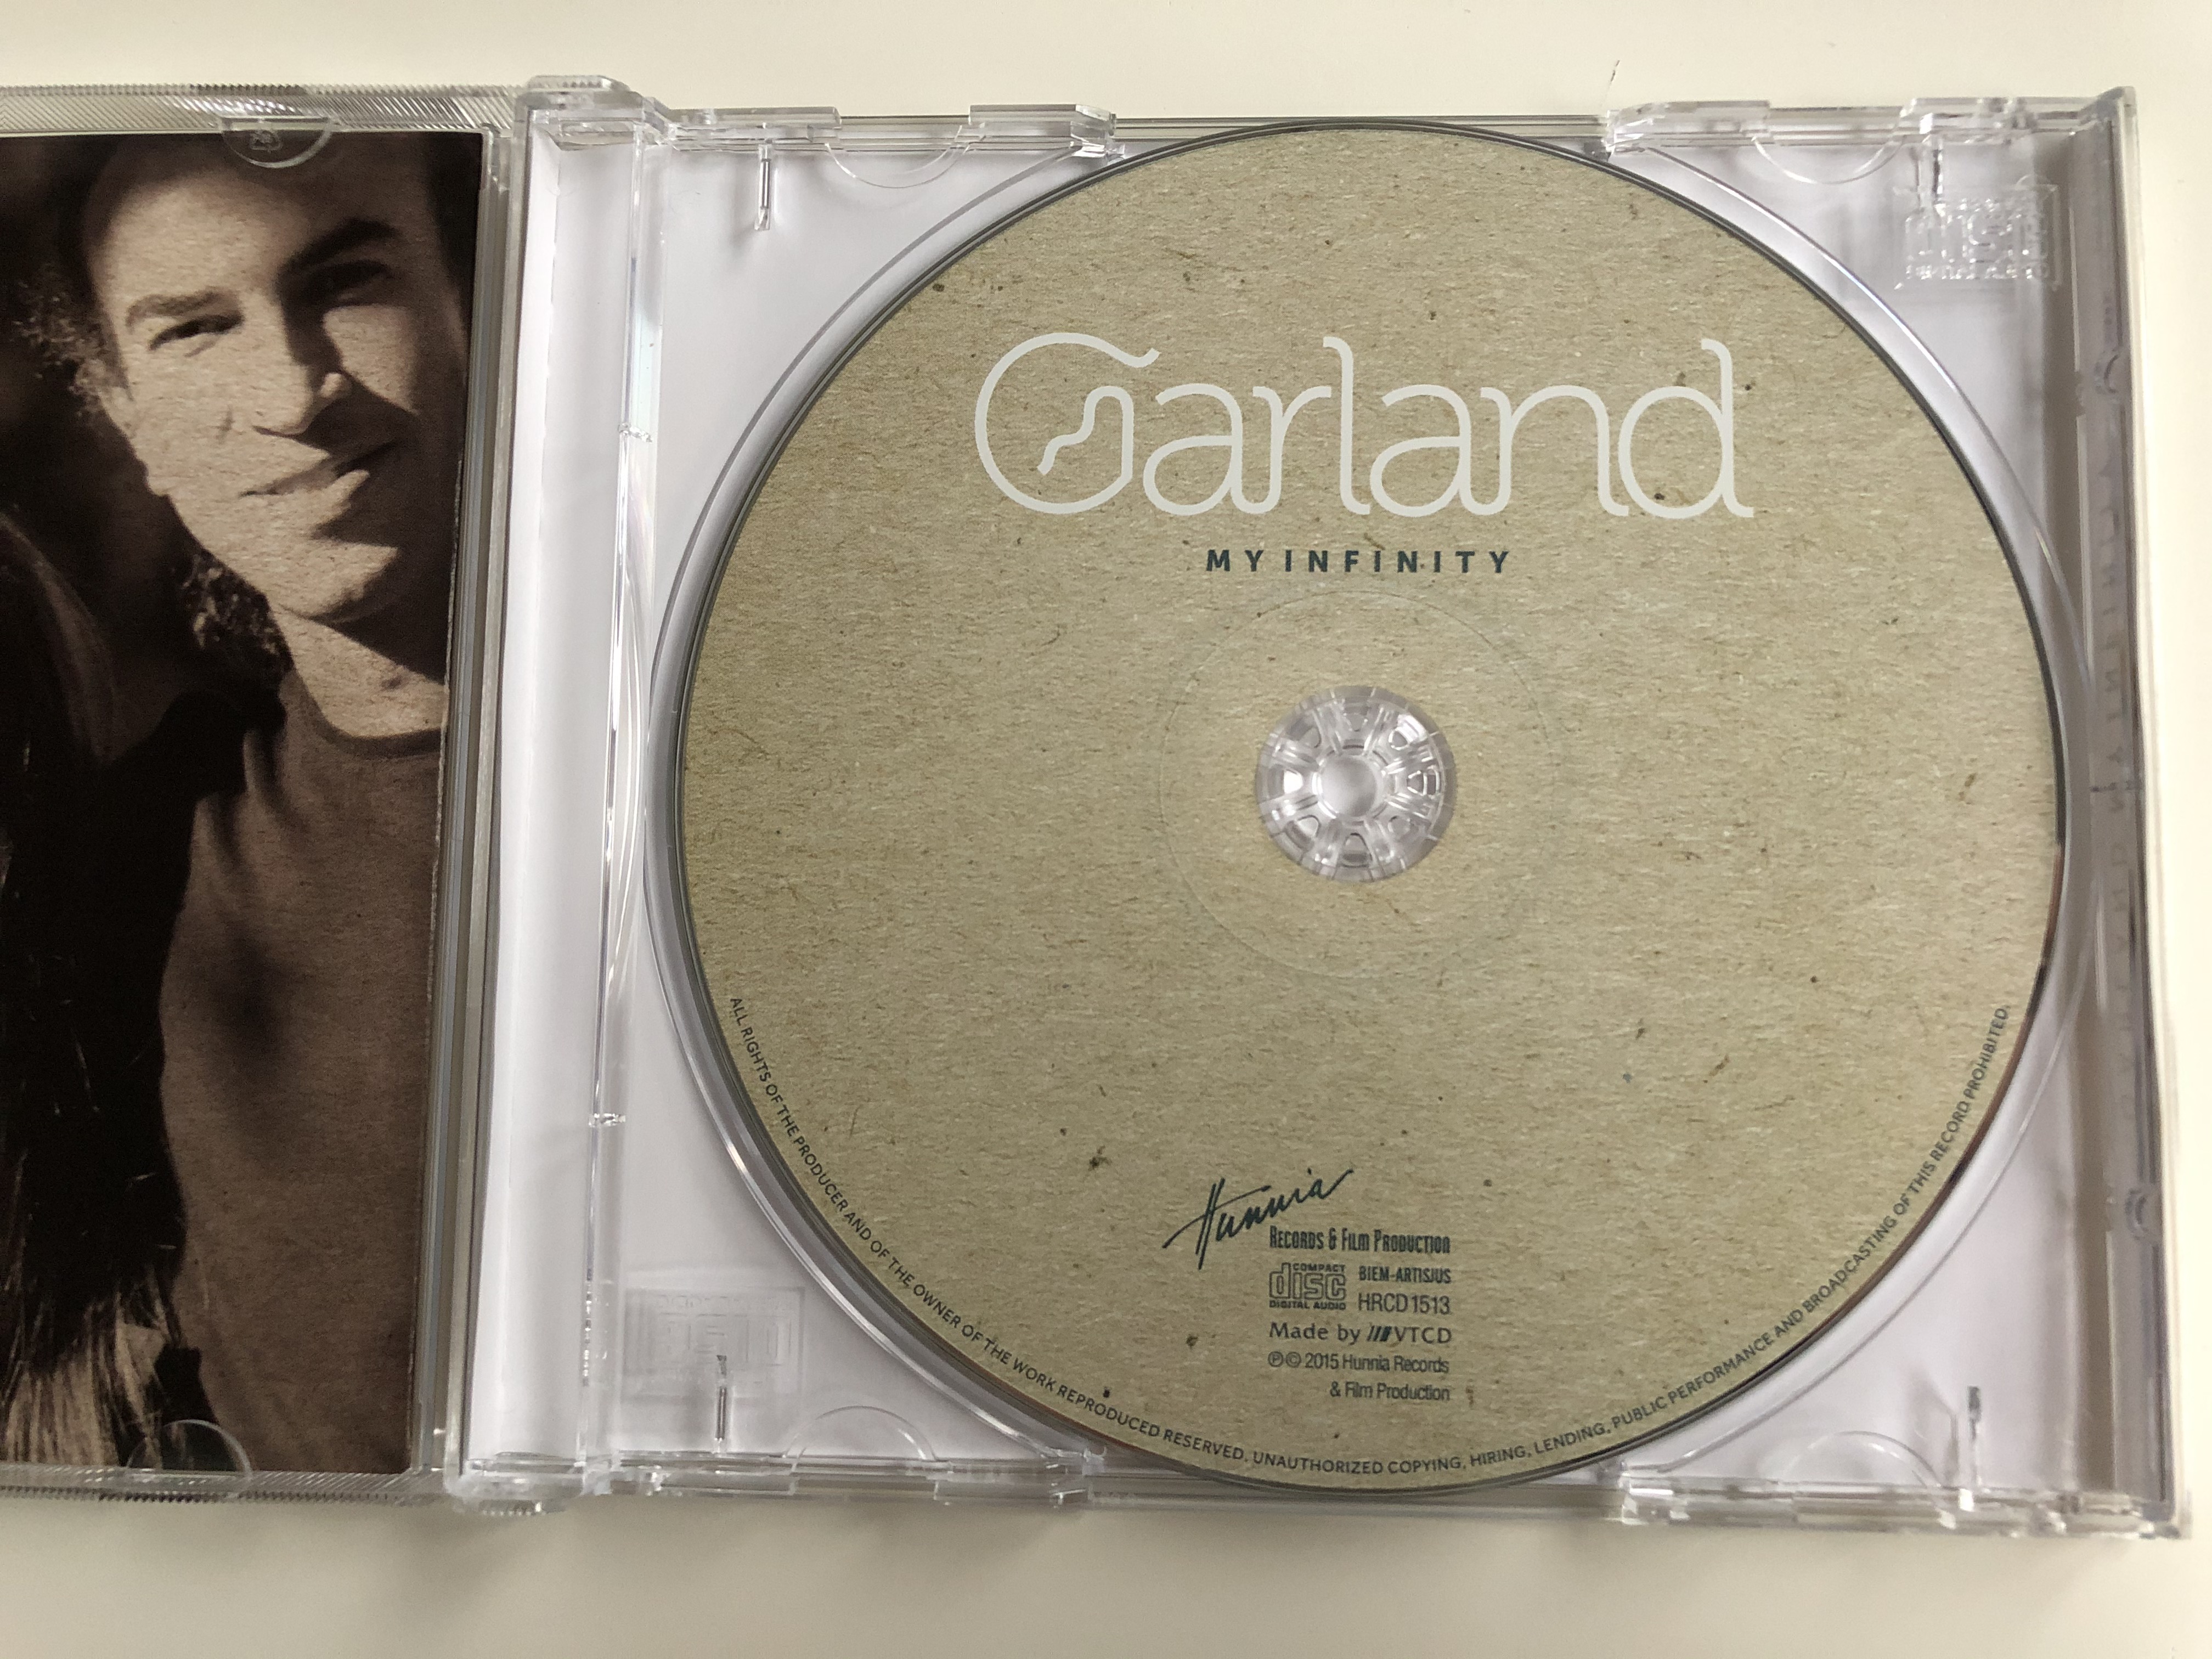 garland-my-infinity-hunnia-records-film-production-audio-cd-2015-hrcd-1513-4-.jpg